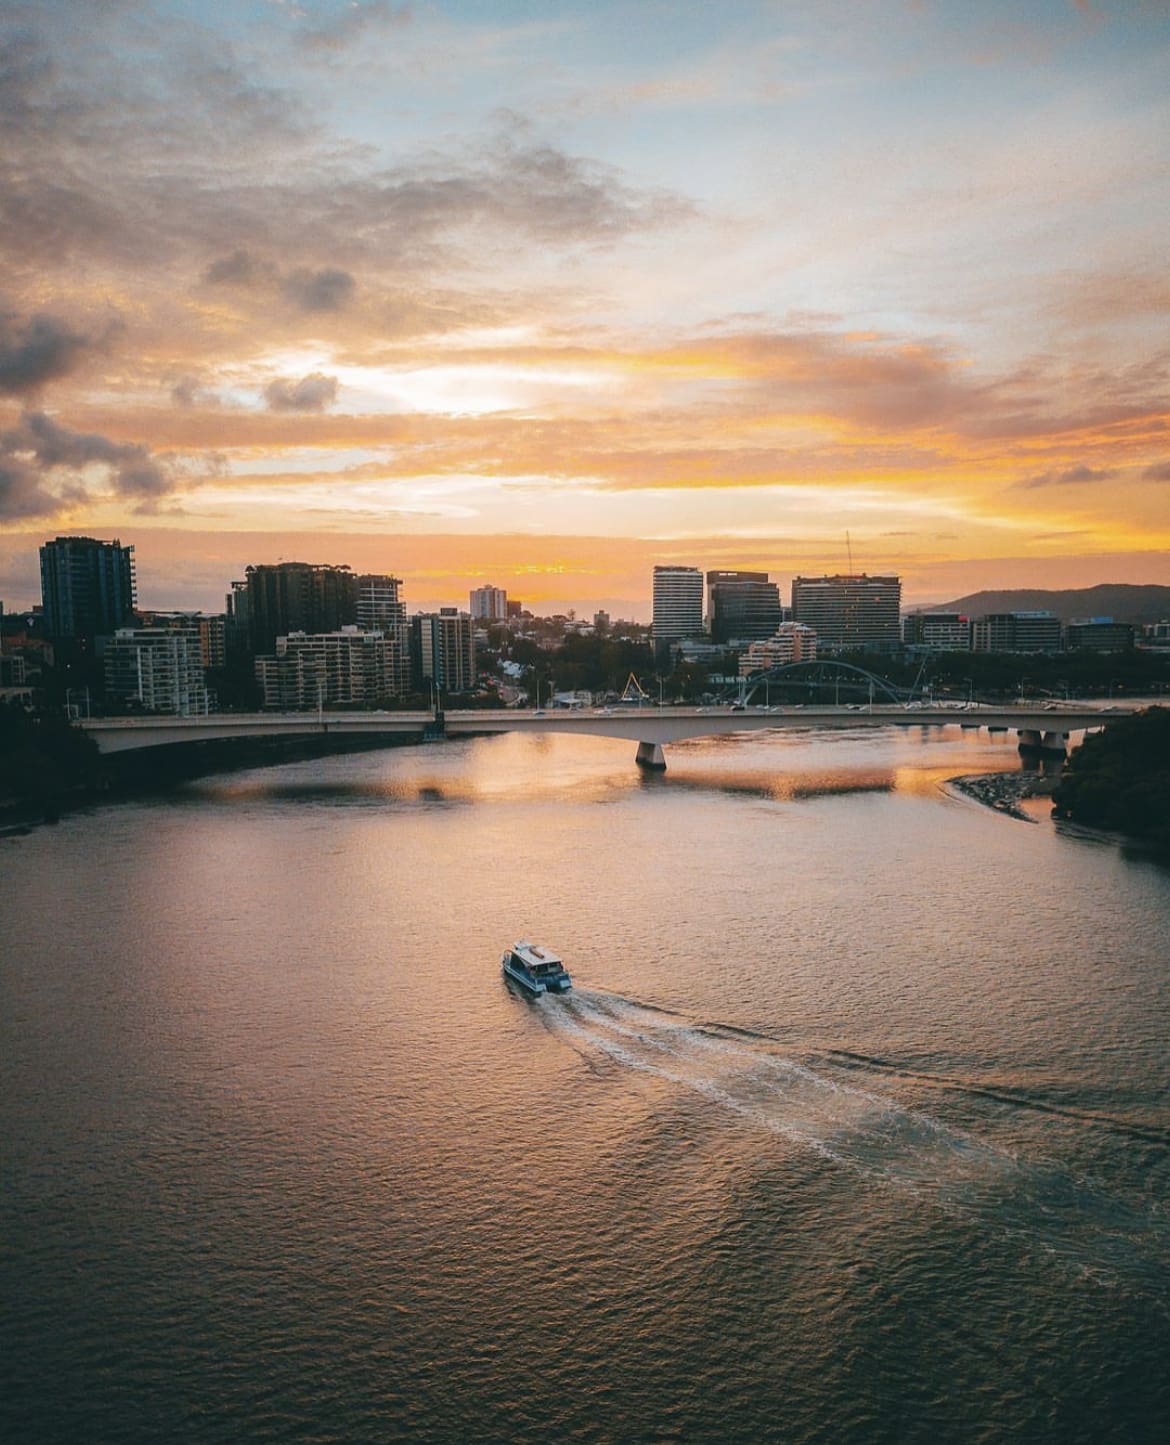 Brisbane River Cruise - The 15 Best Things To Do in Brisbane, Australia